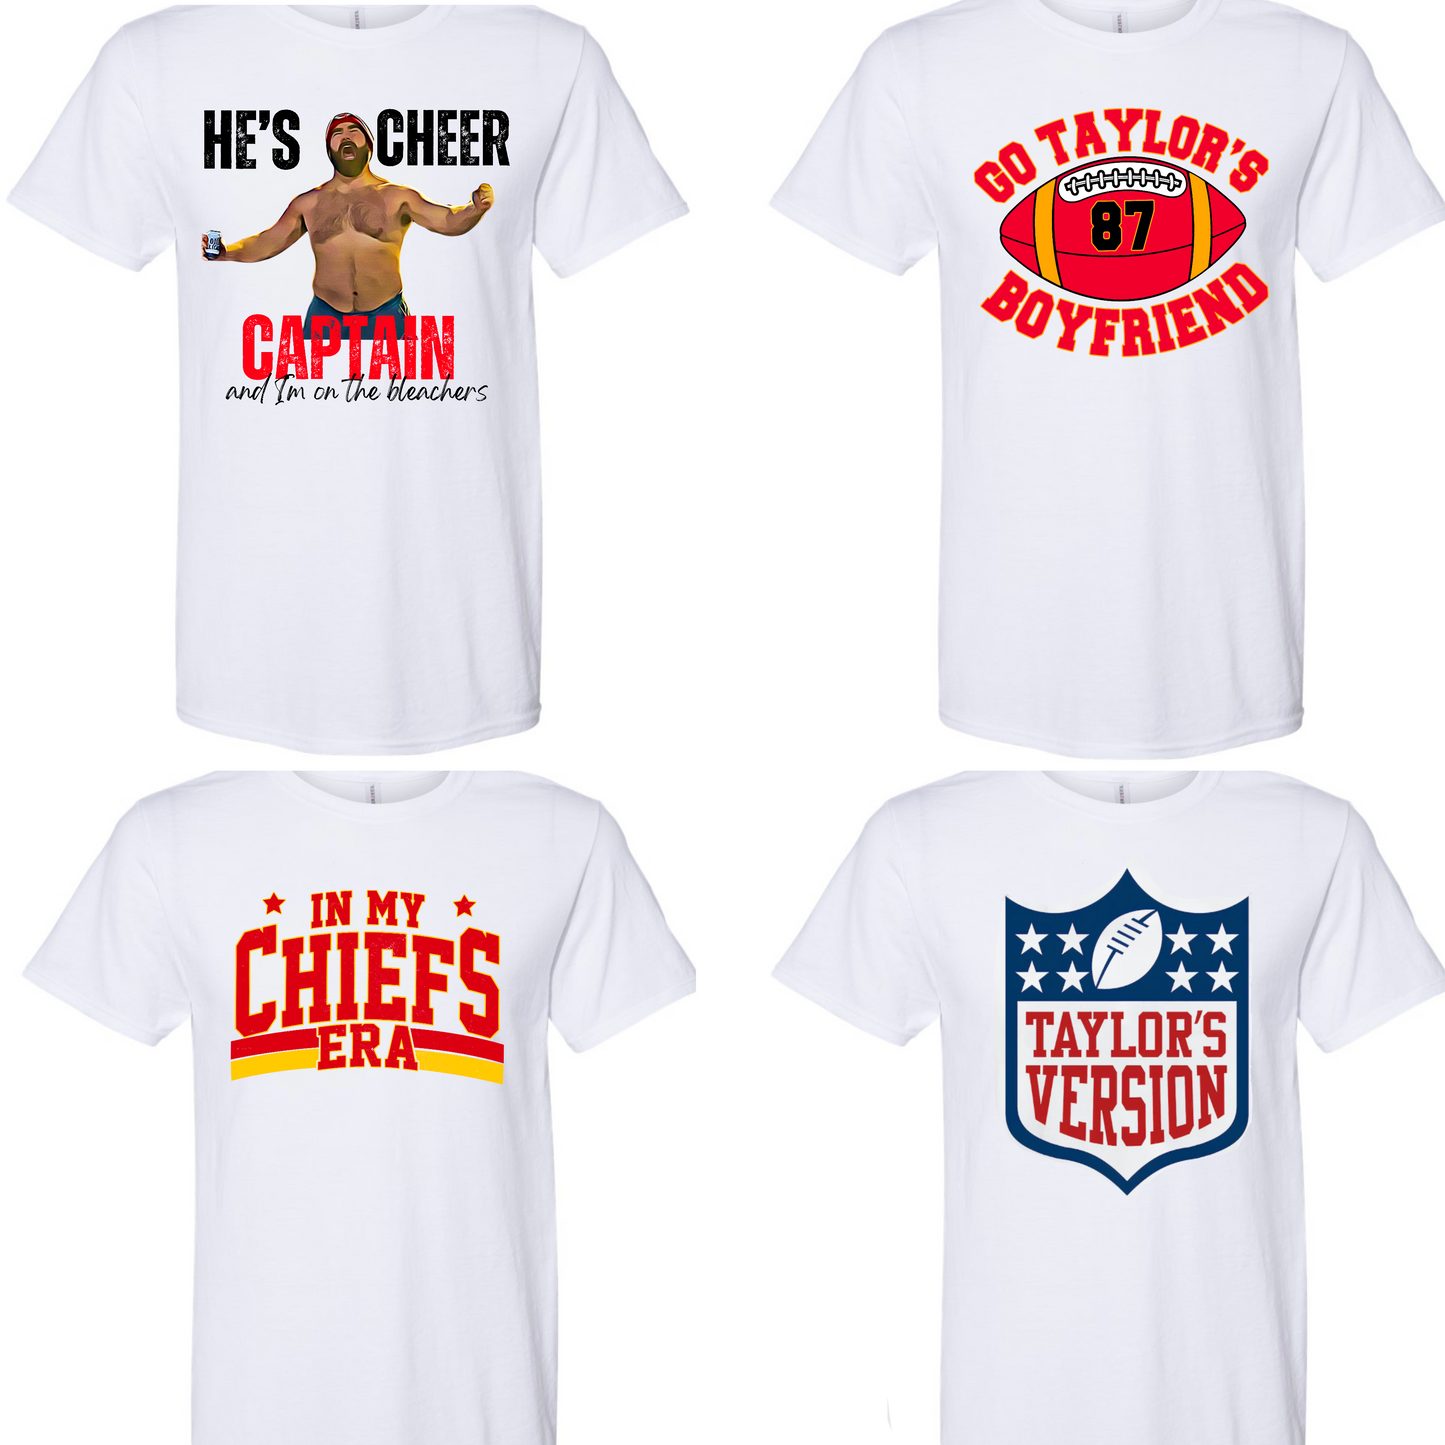 Big Football Game - Tay’s Version t-shirt